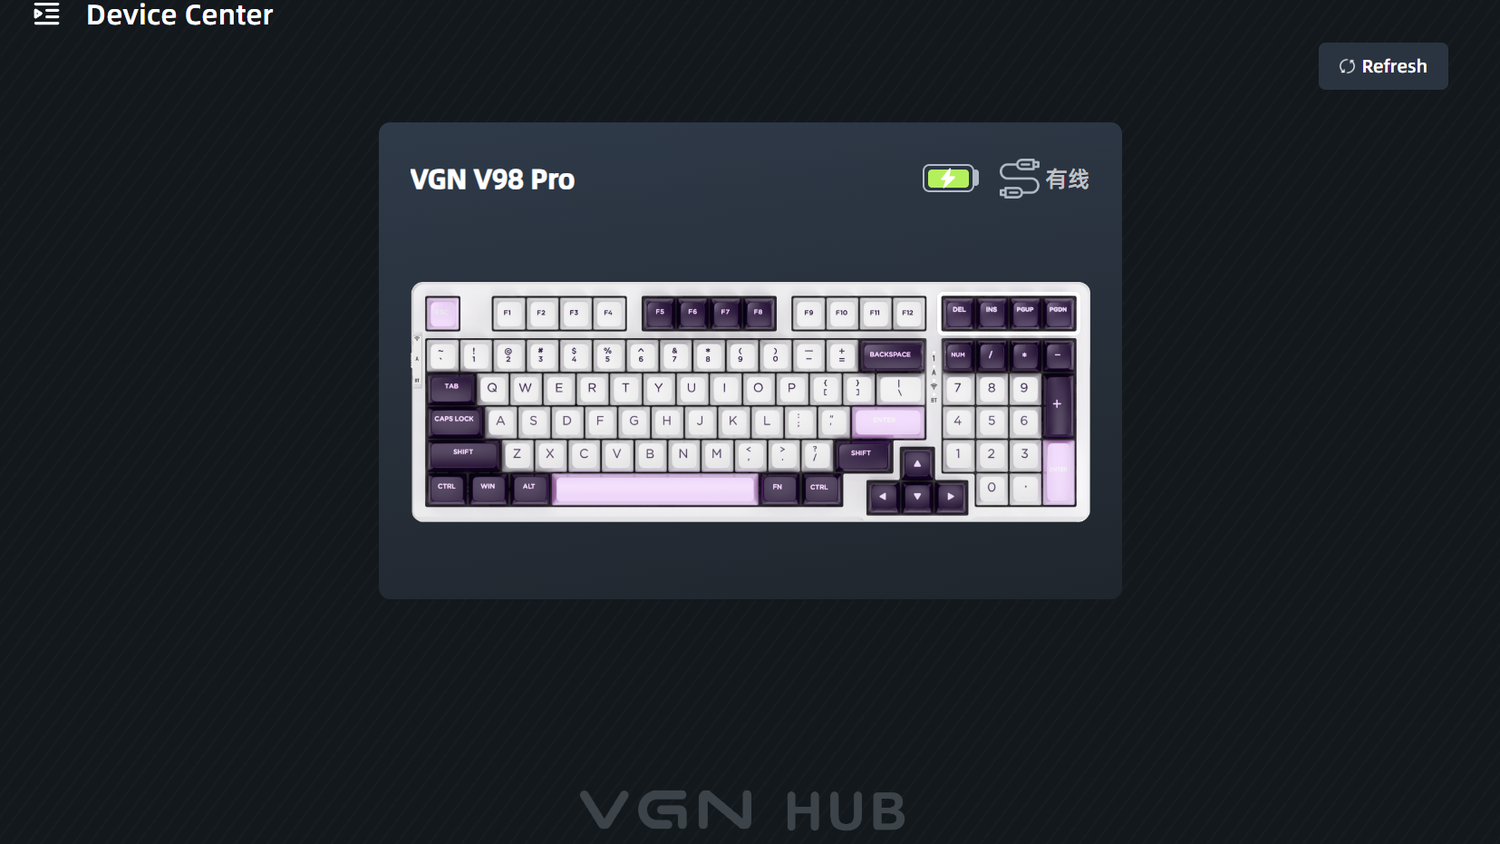 How to Use VGN HUB? -Keyboard Settings